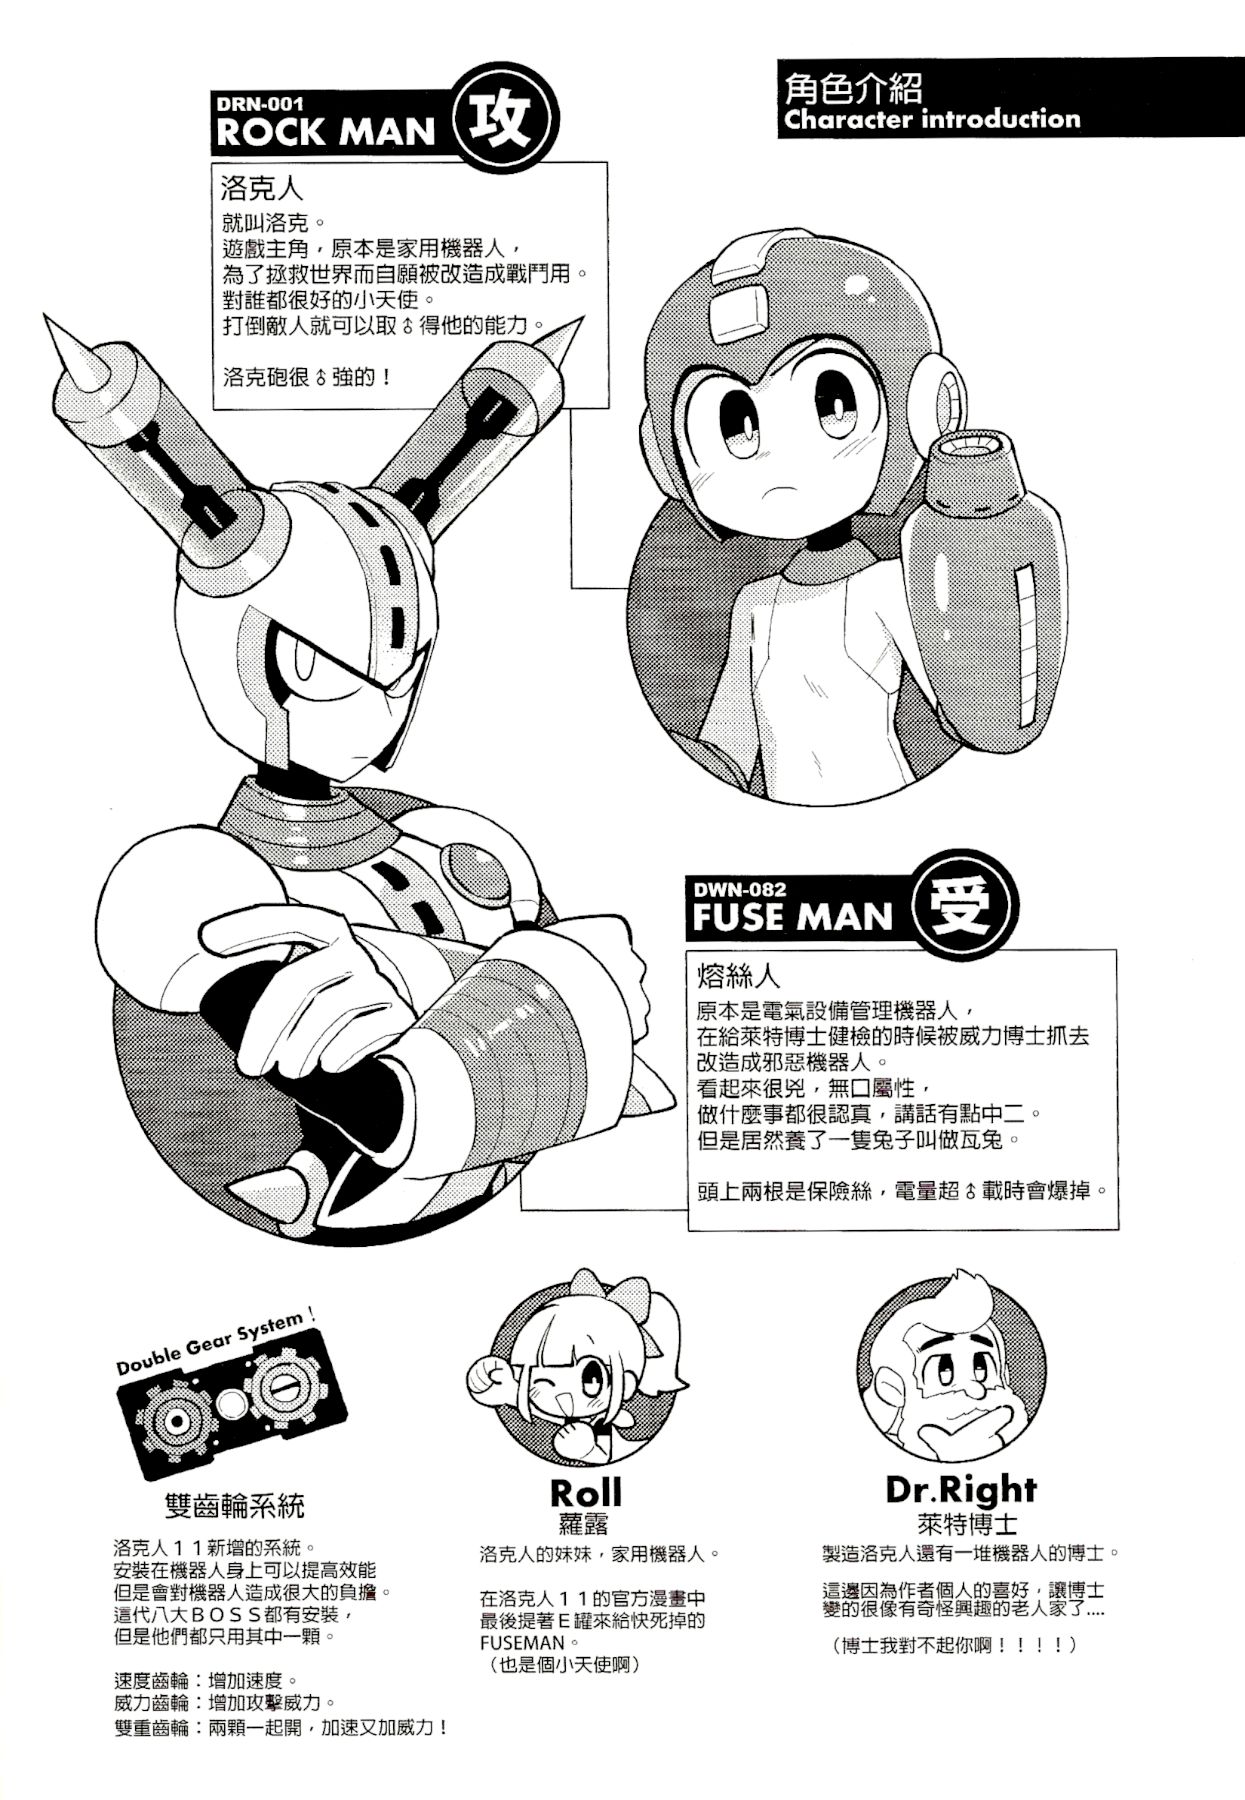 (Finish Prison) Luòkè rén 11-FUSEMAN gōnglüè běn | "Rockman 11-FUSEMAN Raiders" (Mega Man) (完獄) 洛克人11-FUSEMAN攻略本 (洛克人)